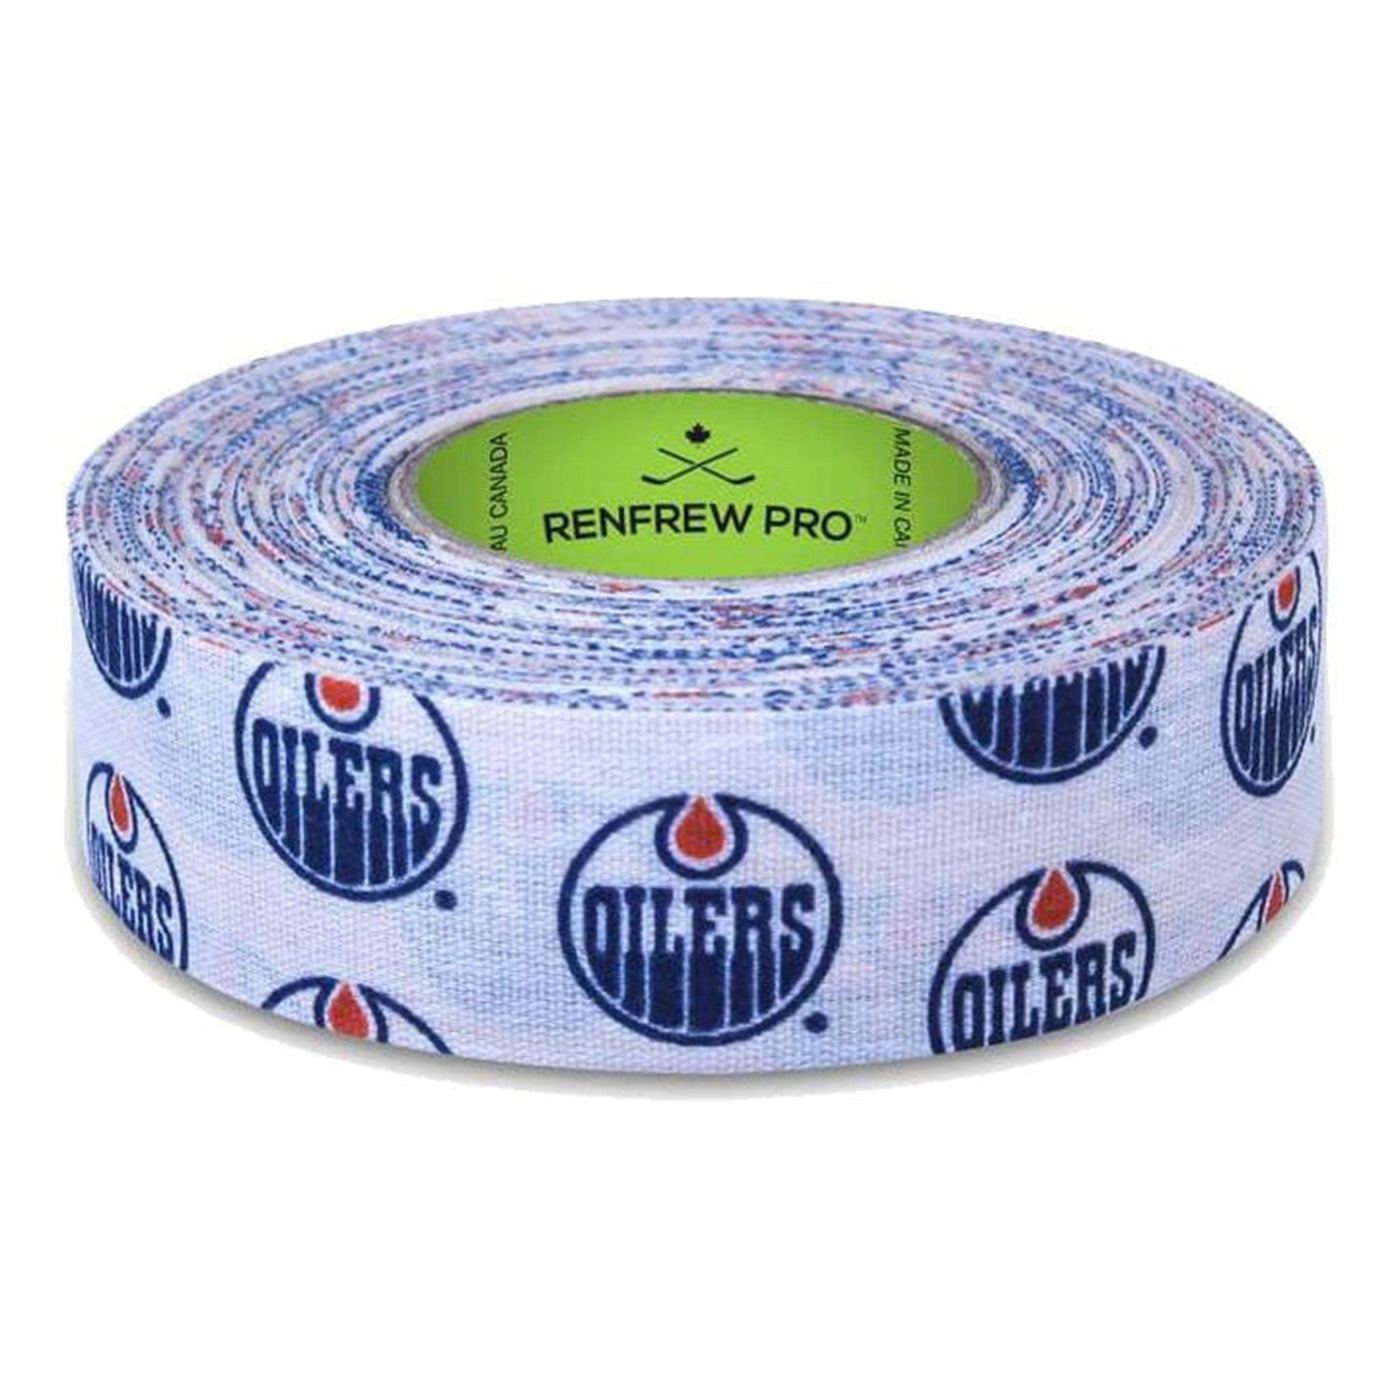 Renfrew NHL Hockey Stick Tape - The Hockey Shop Source For Sports